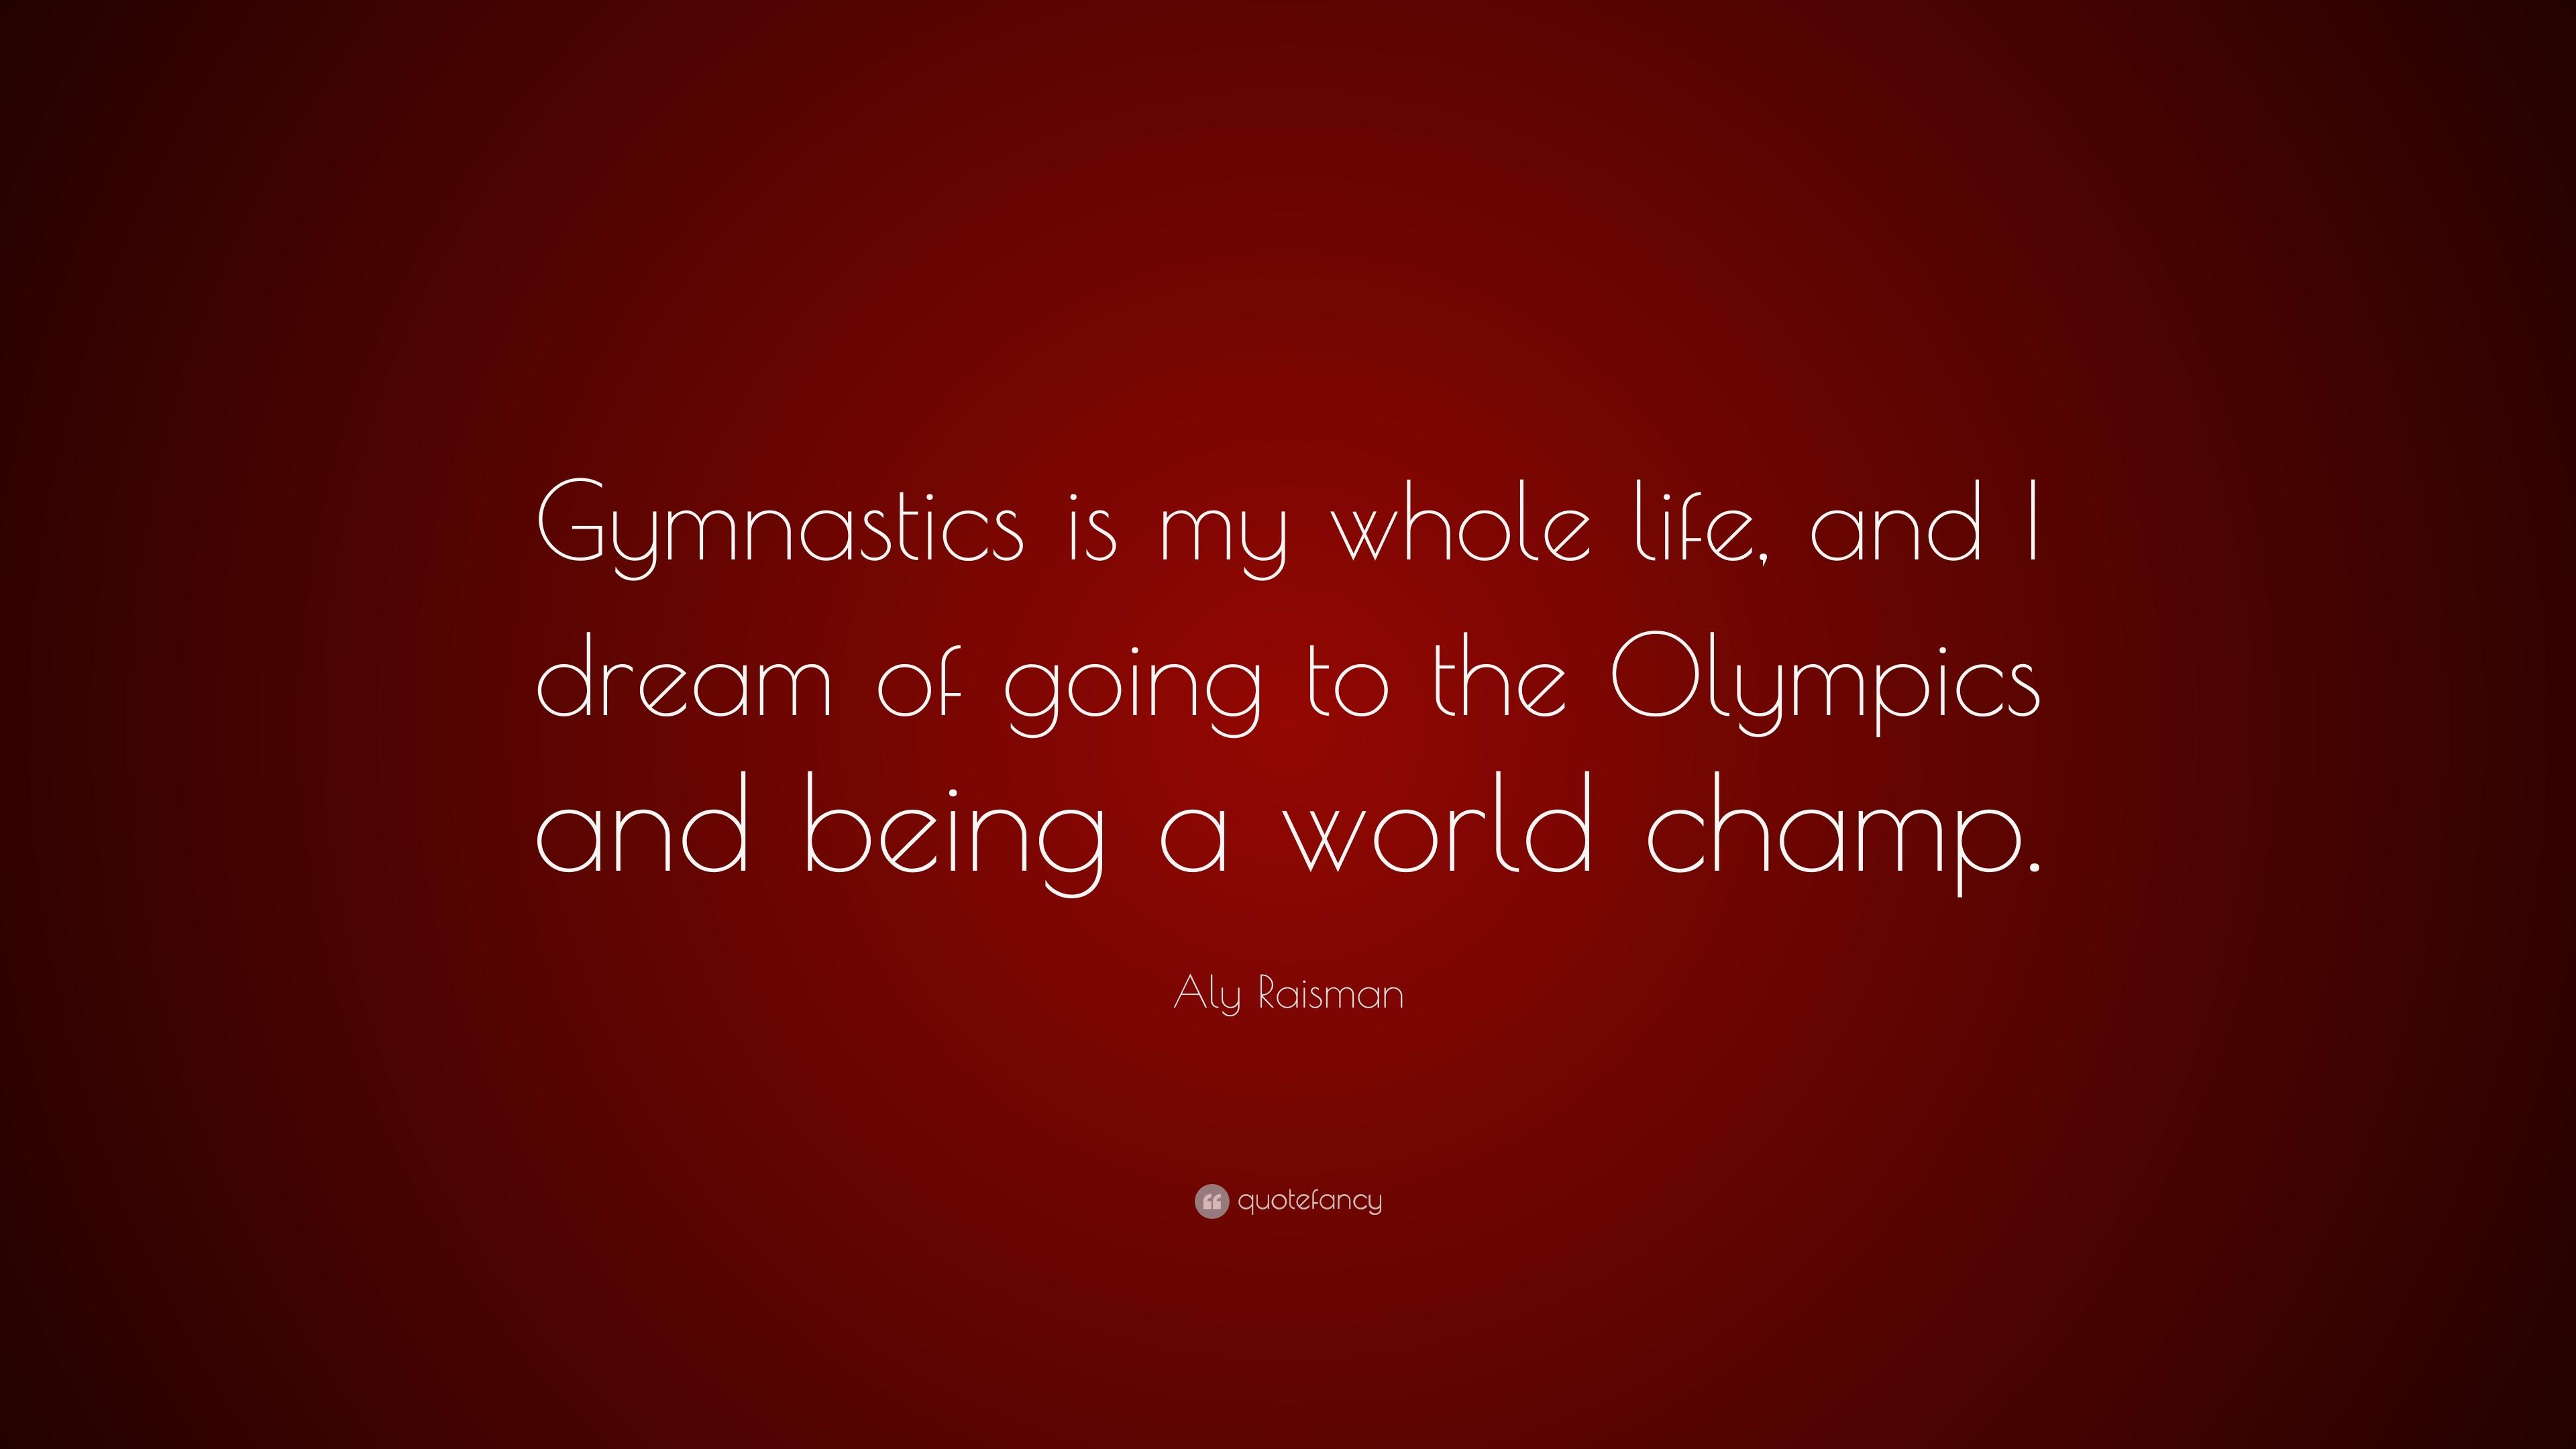 Aly Raisman Quote: “Gymnastics is my whole life, and I dream